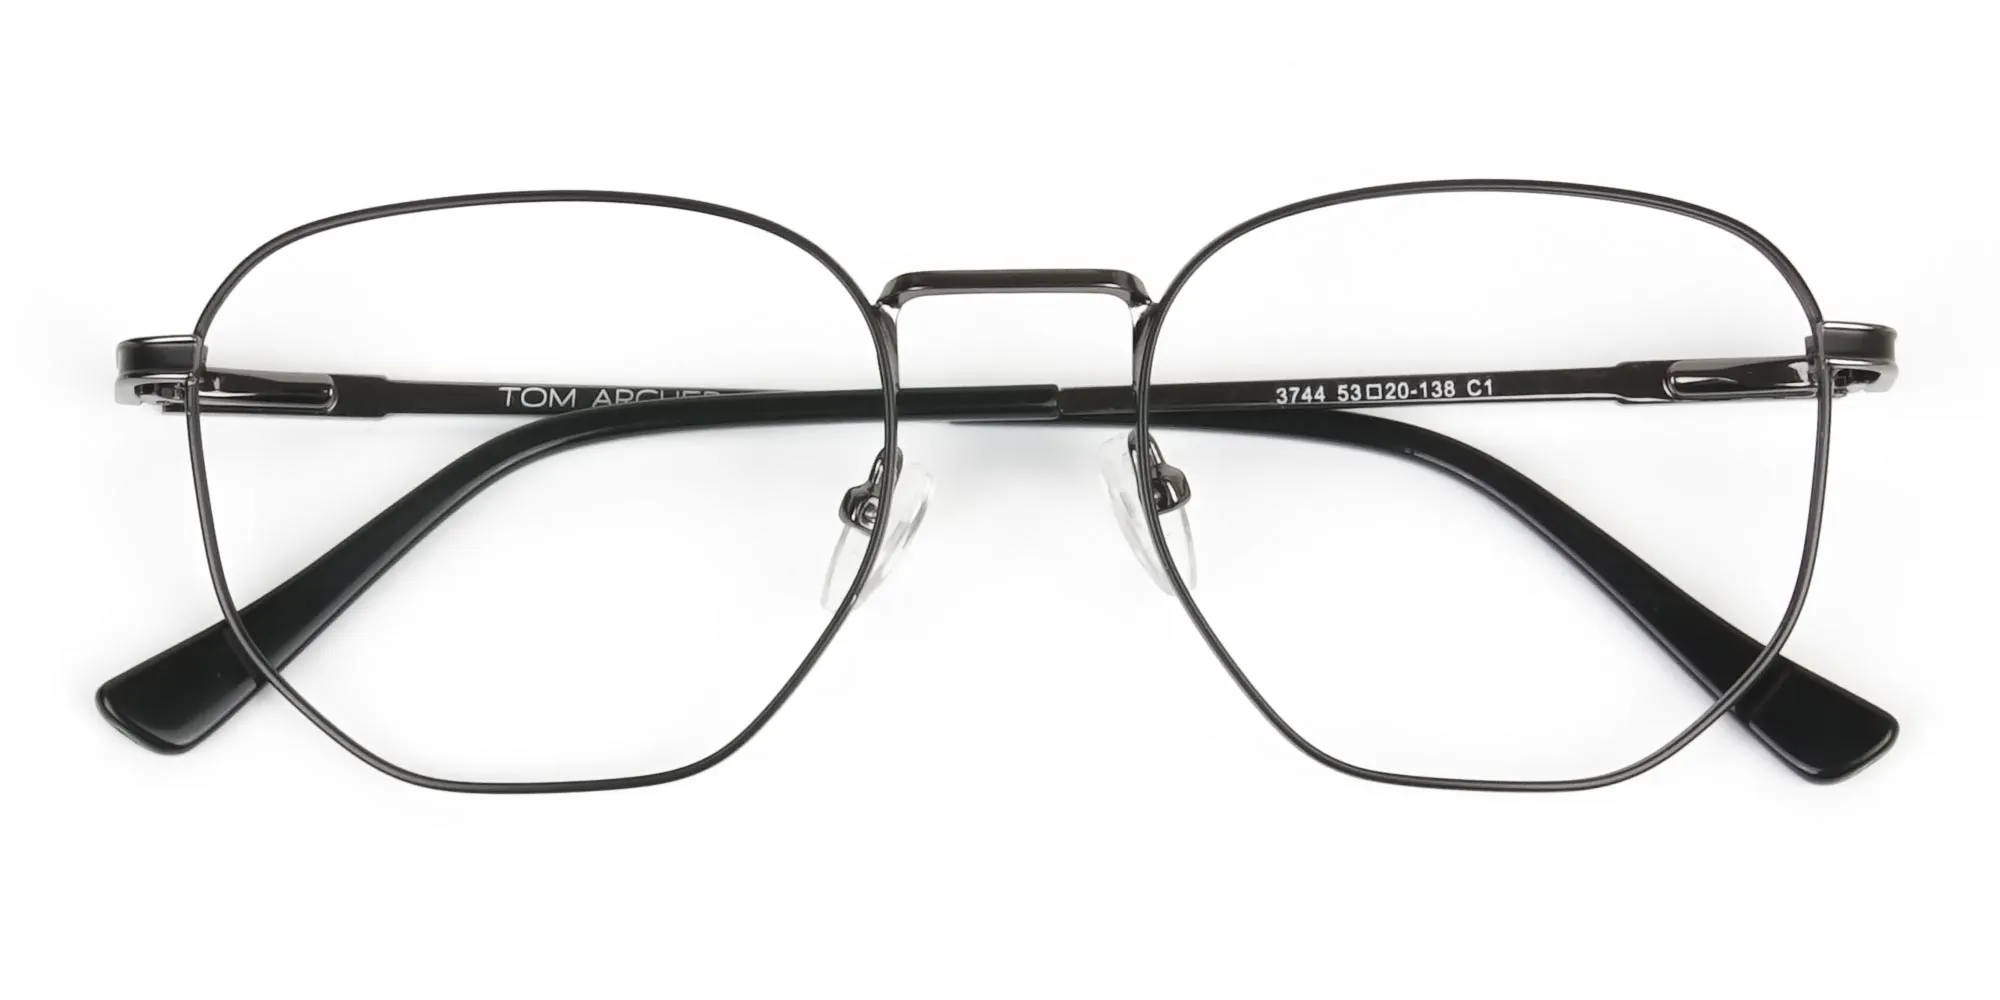 Lightweight Gunmetal Black Geometric Glasses - 2